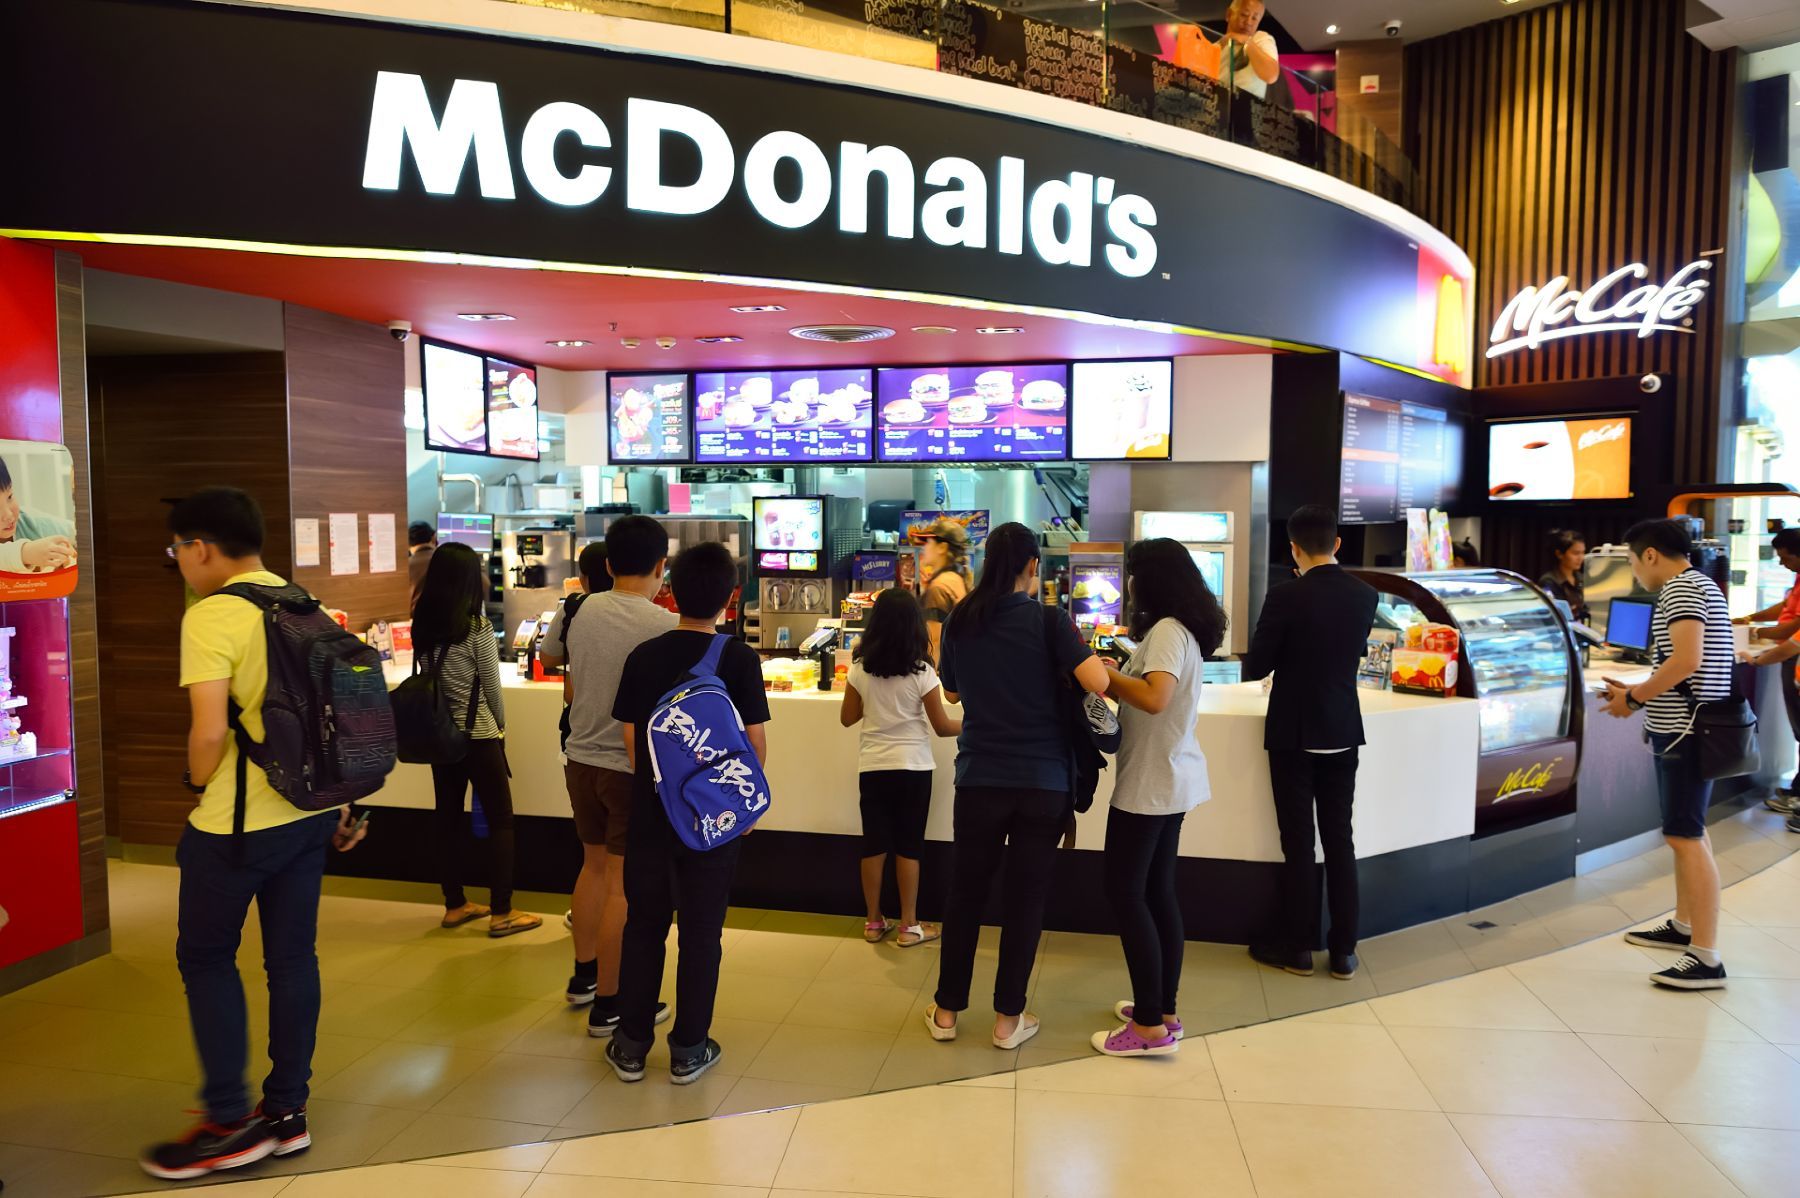 People order food at a McDonald's - racial discrimination